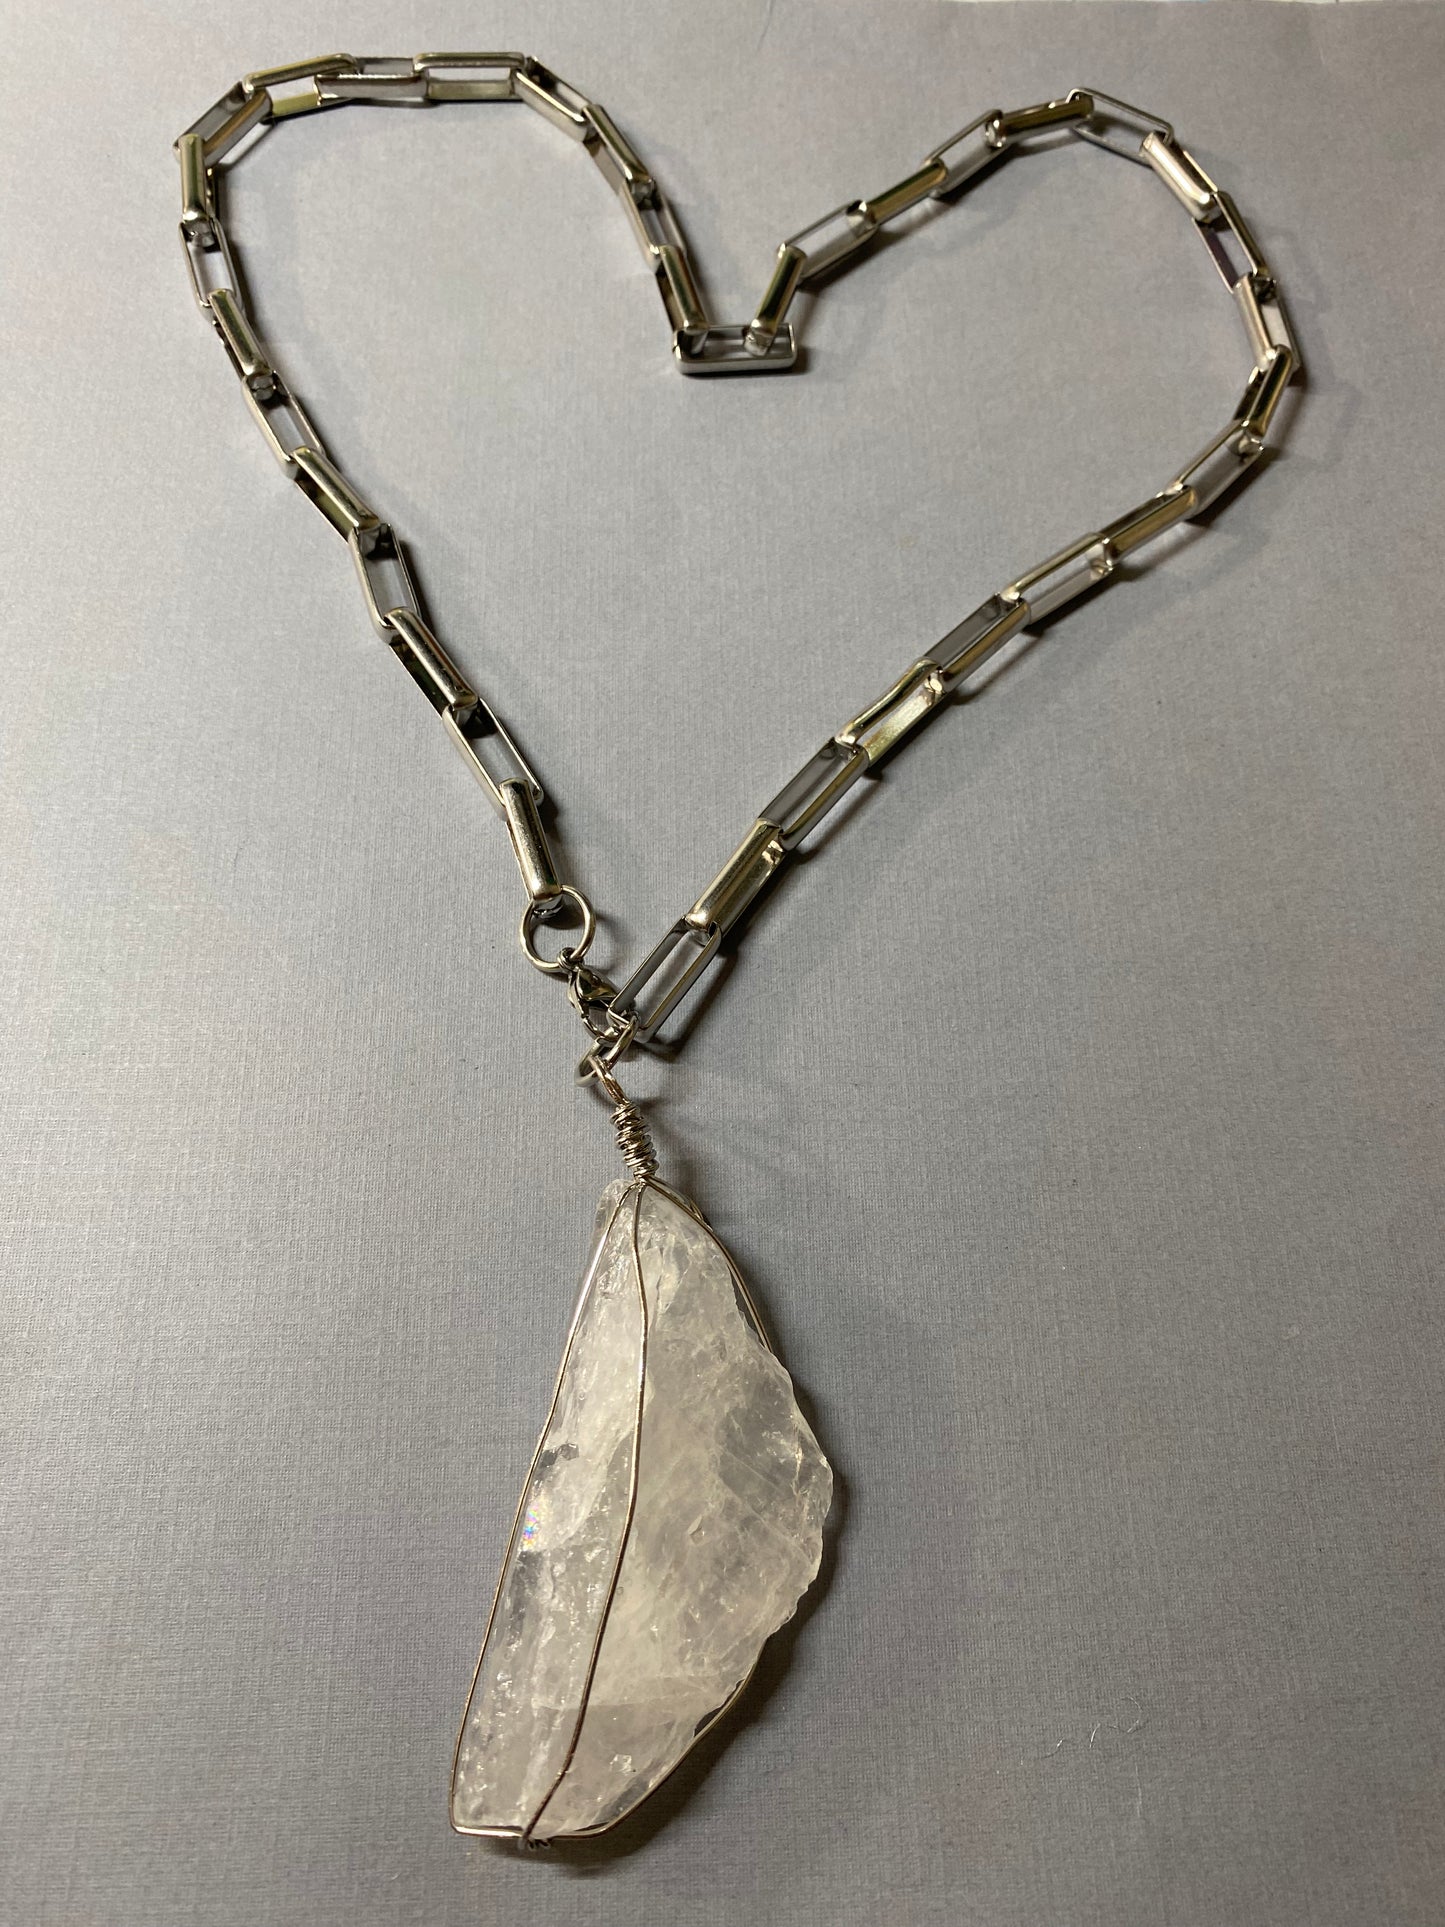 Jumbo quartz crystal necklace